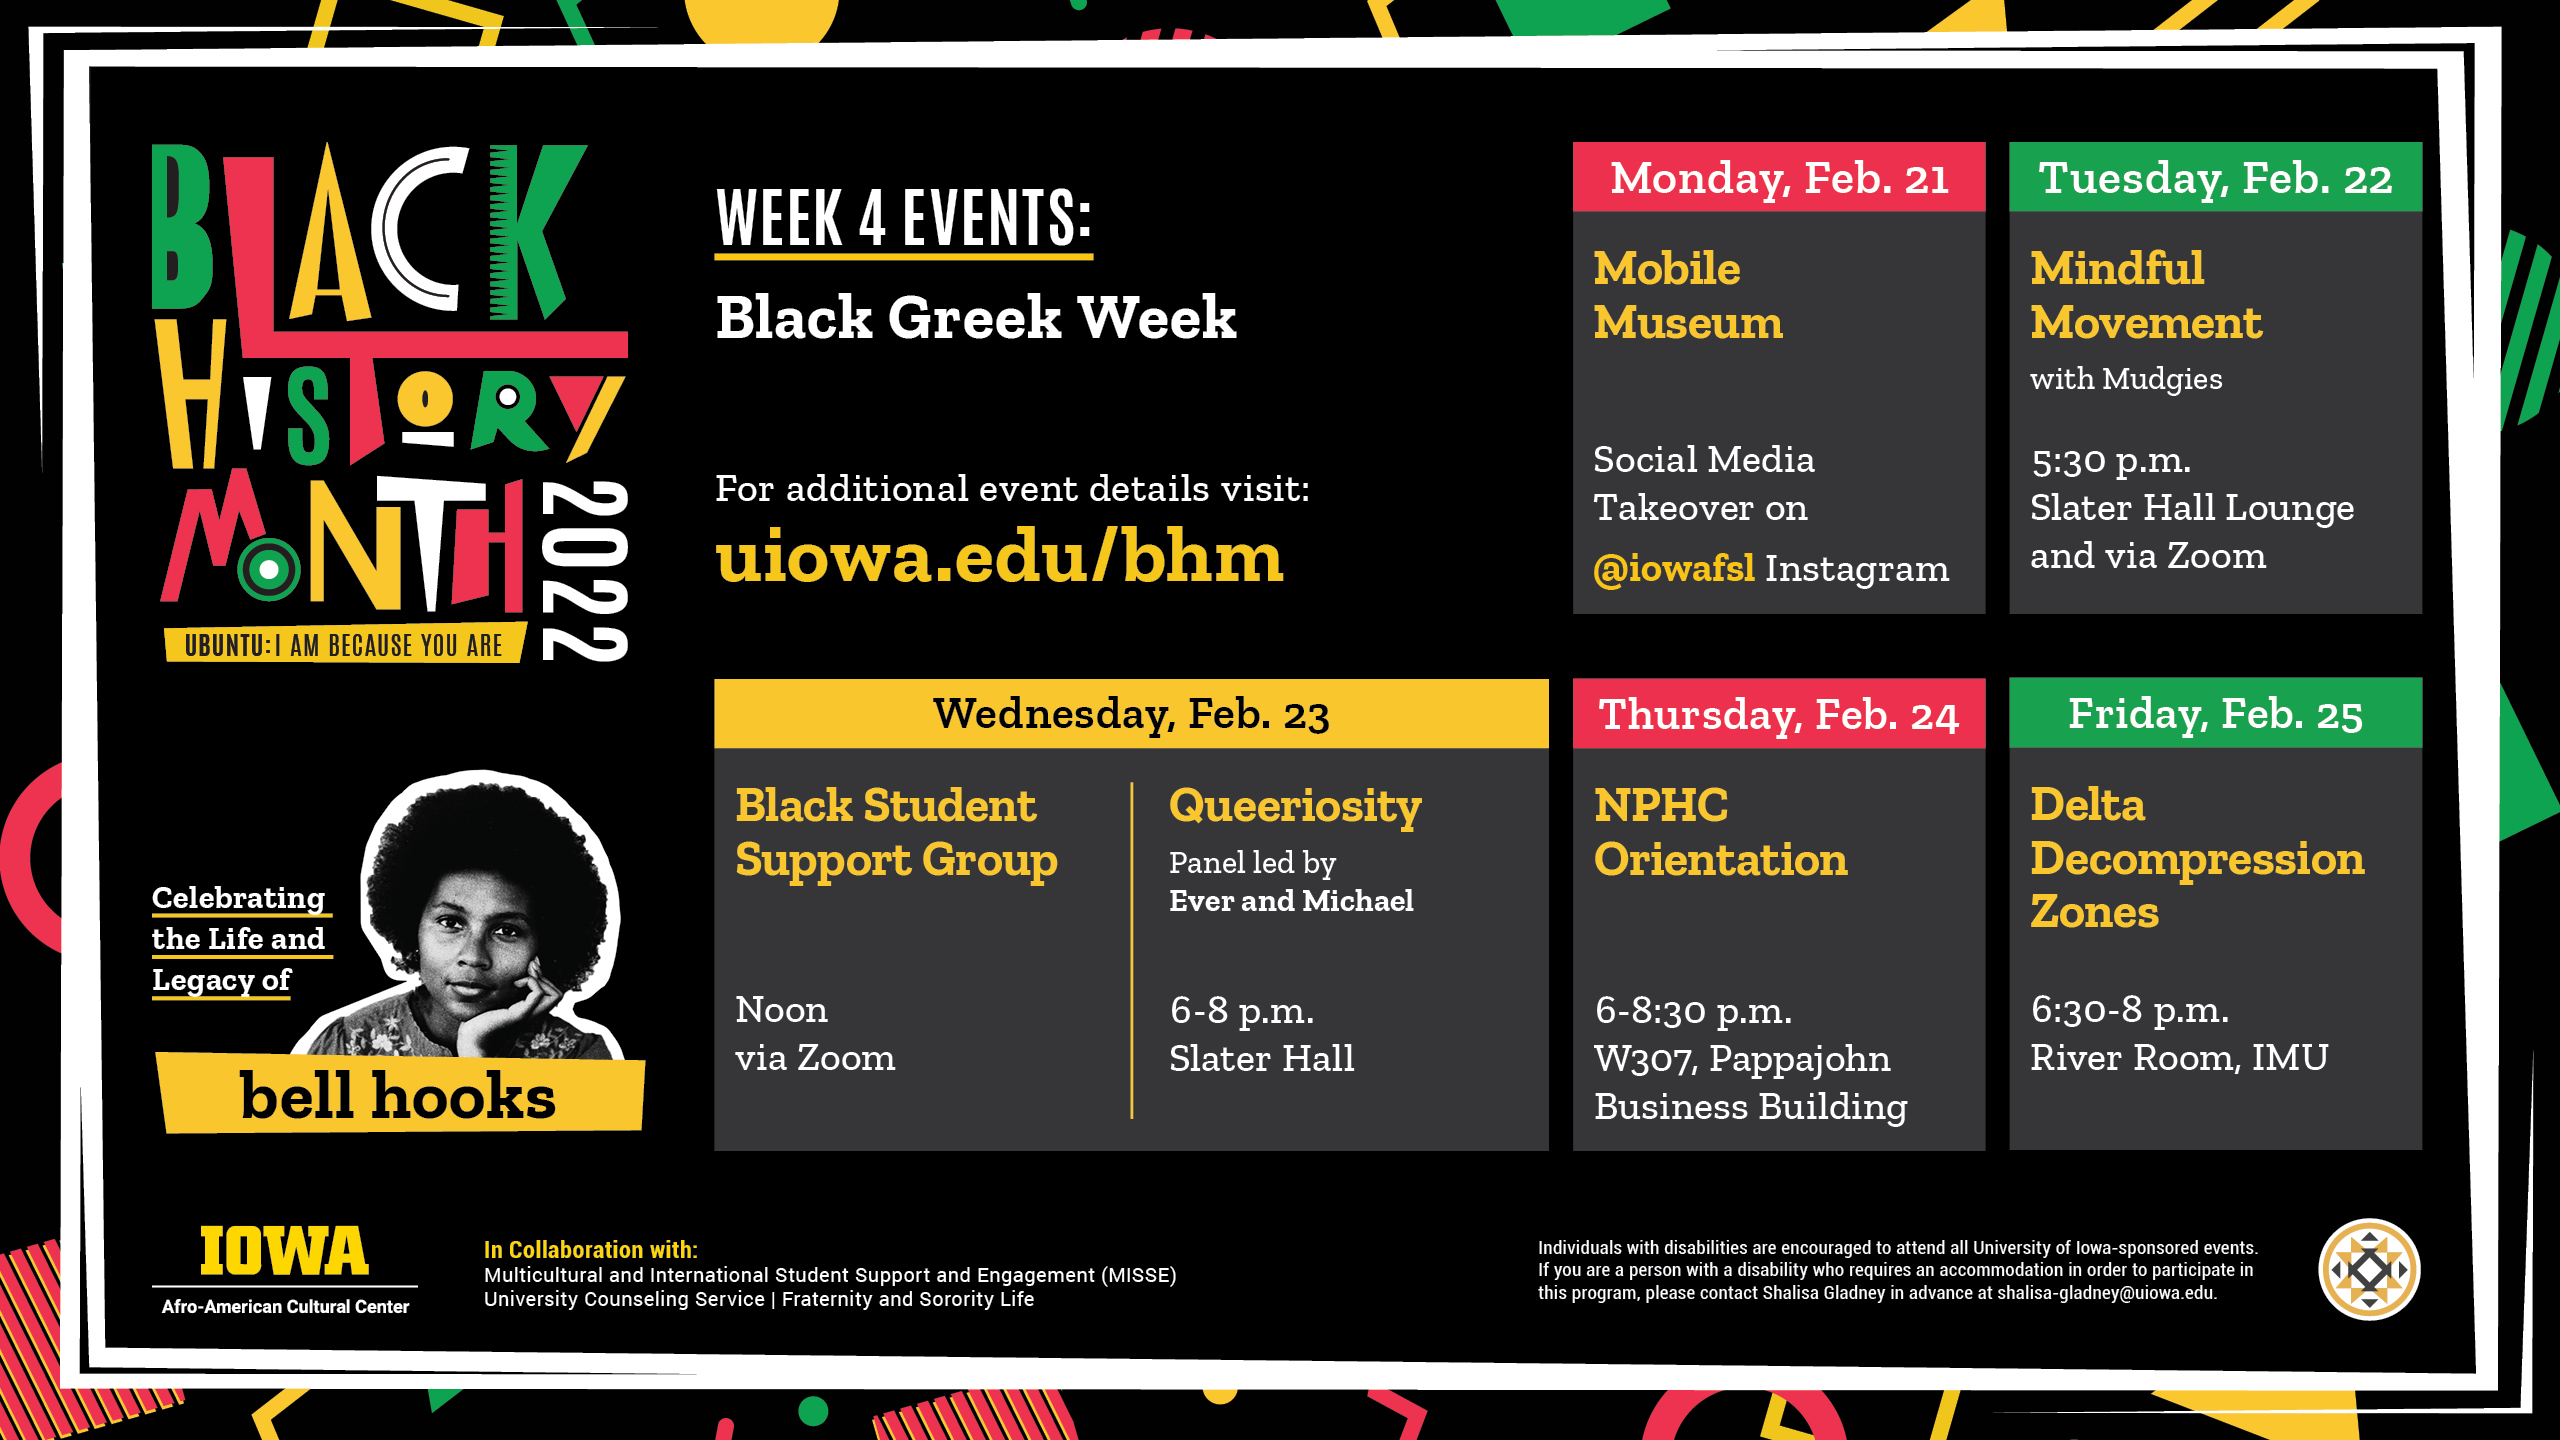 Black History Month 2022 Week 4 events celebrating Black Greek Week! Visit uiowa.edu/BHM for more event information